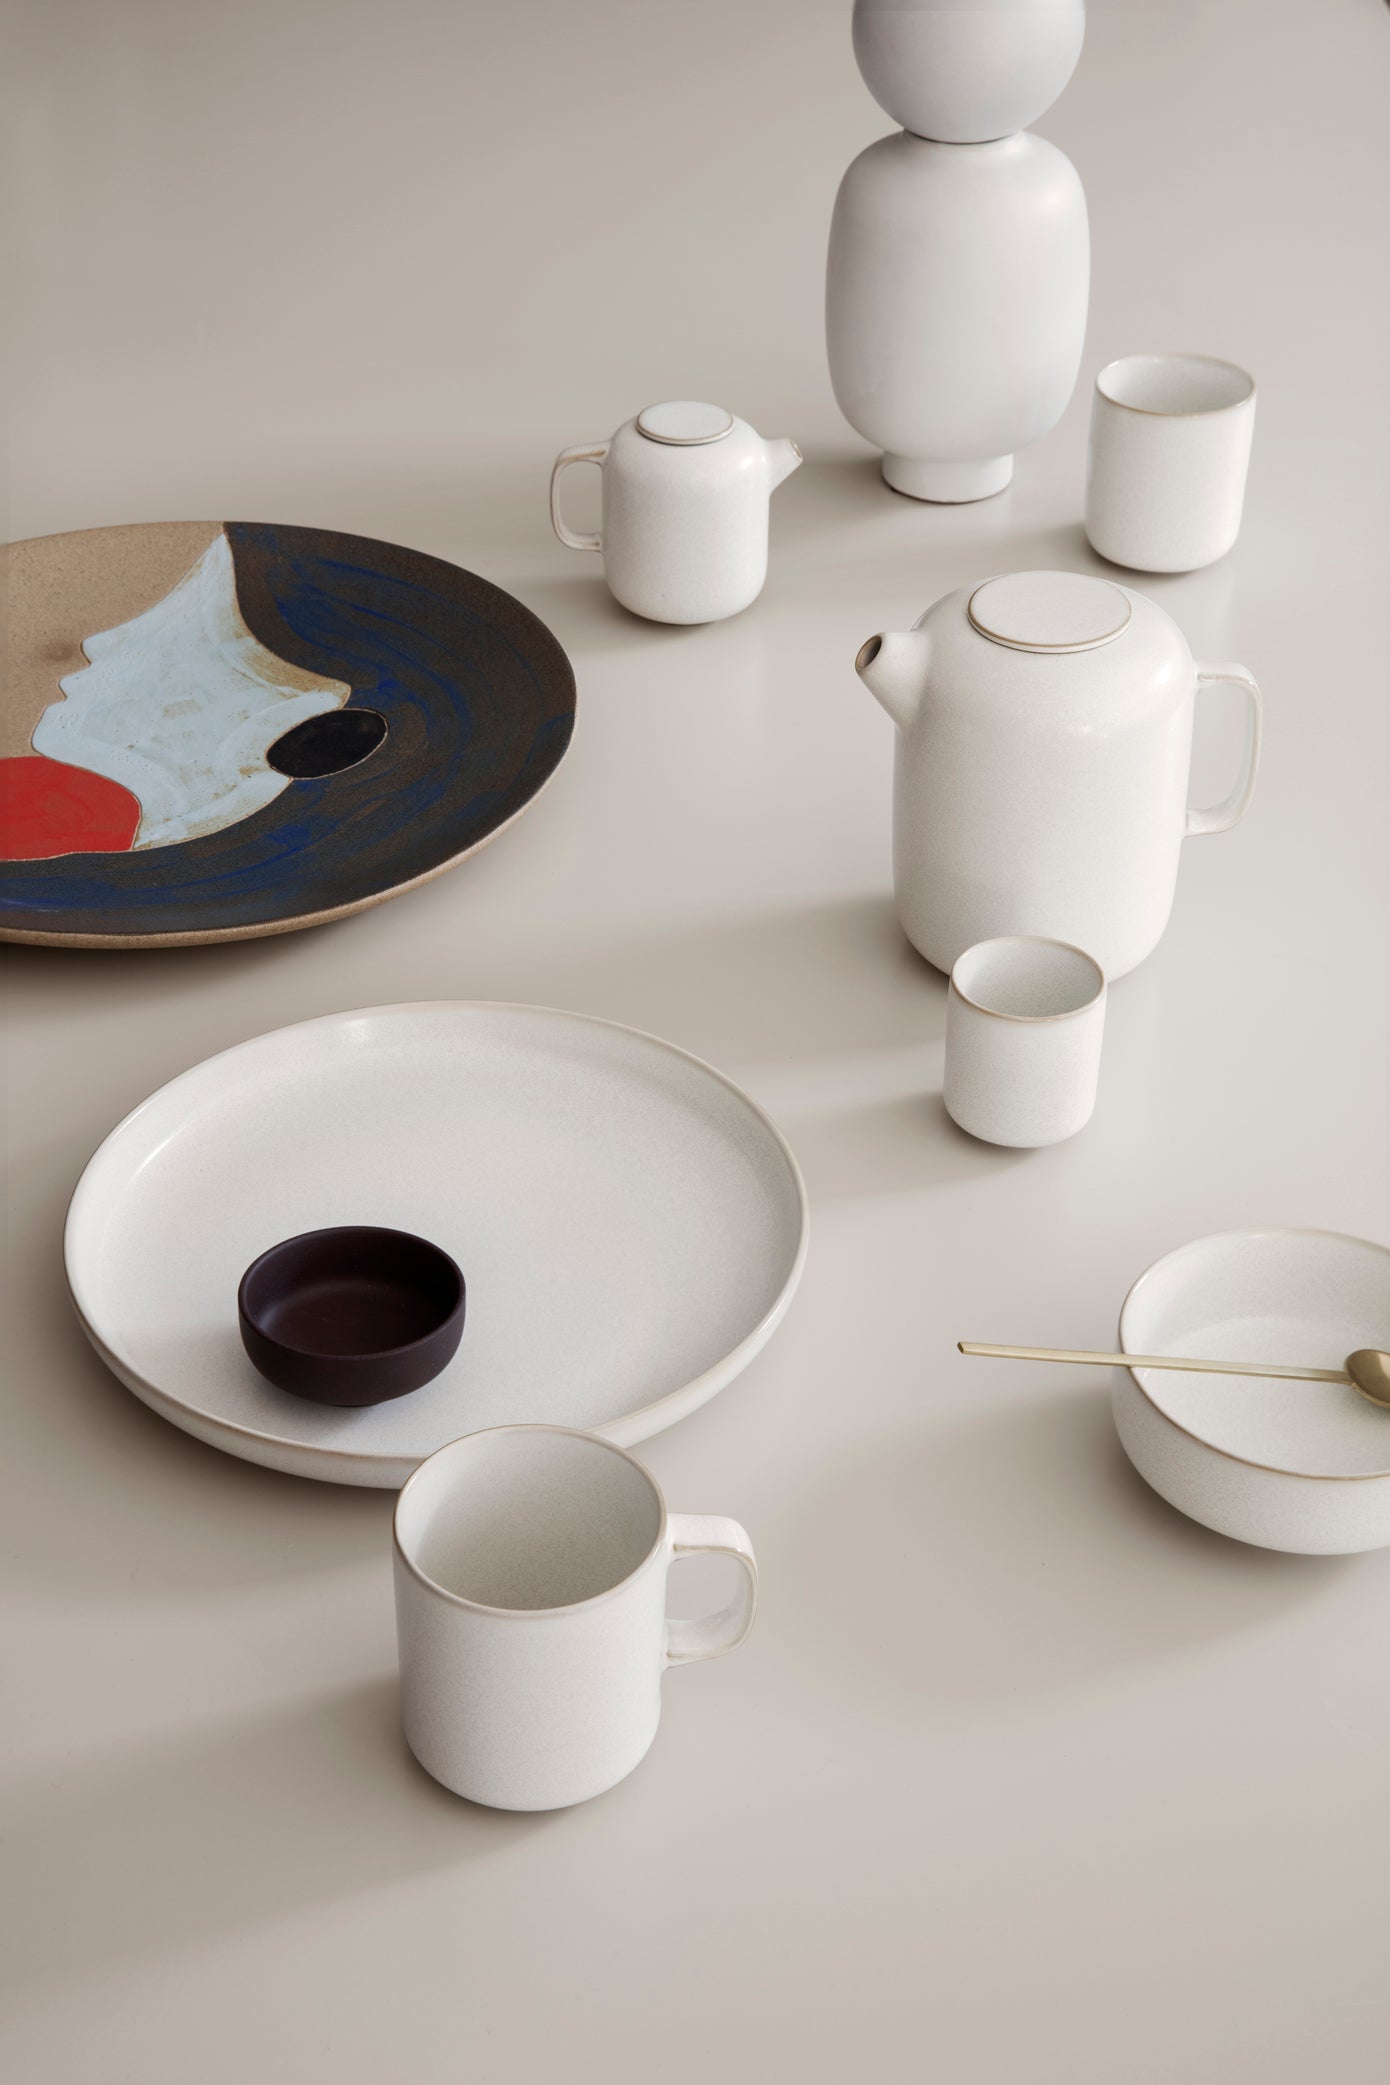 Sekki Coffee Dripper | Cream | Ceramic | by ferm Living - Lifestory